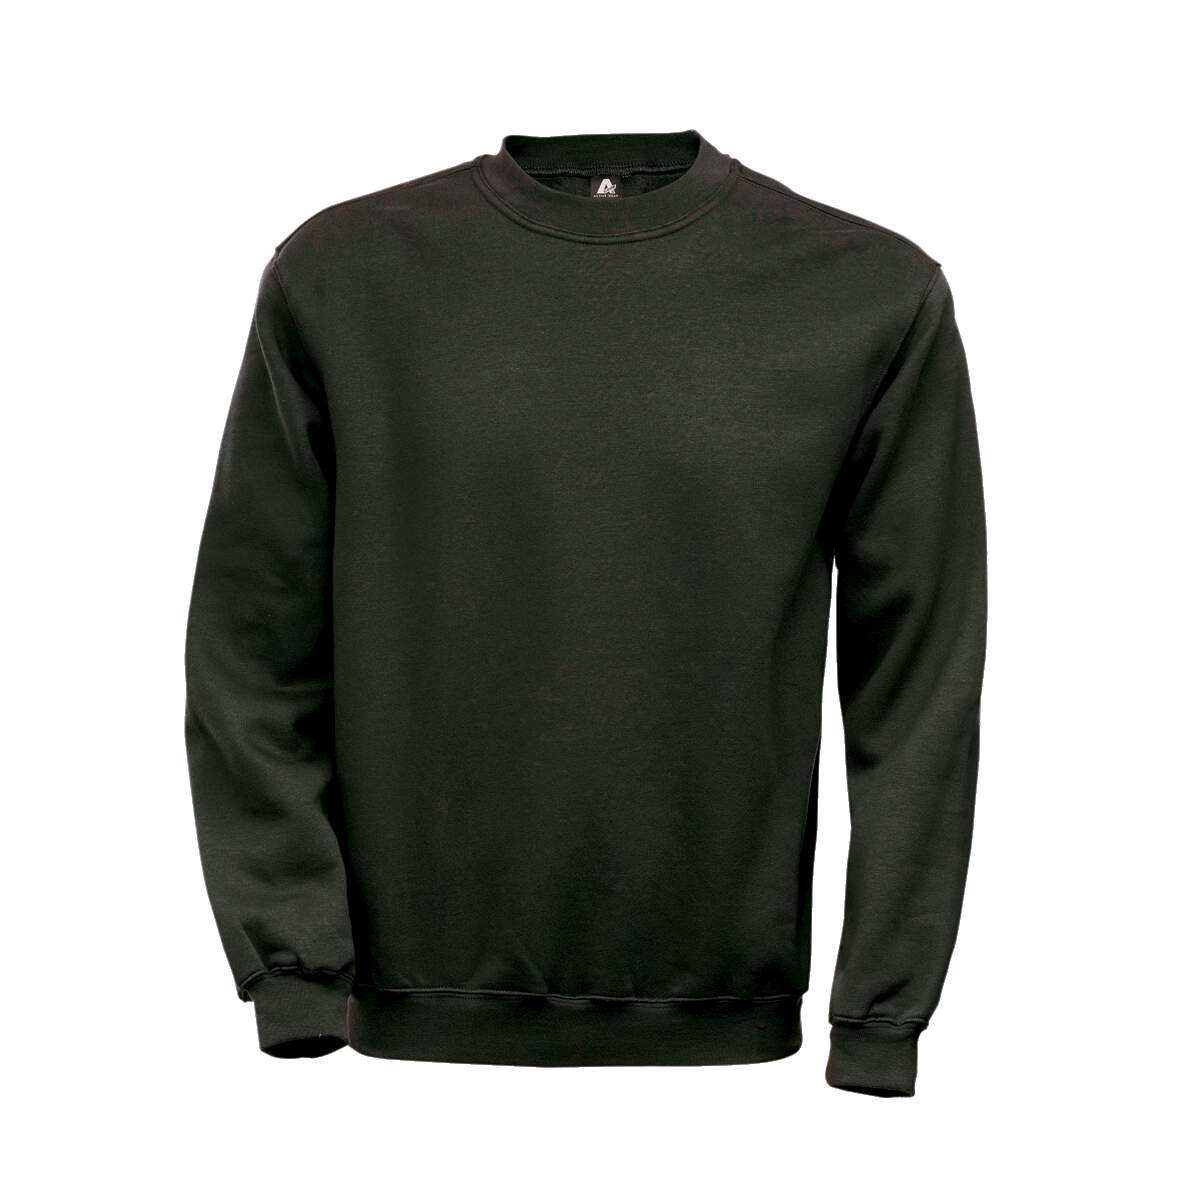 1181286 - Sweatshirt schwarz 100225